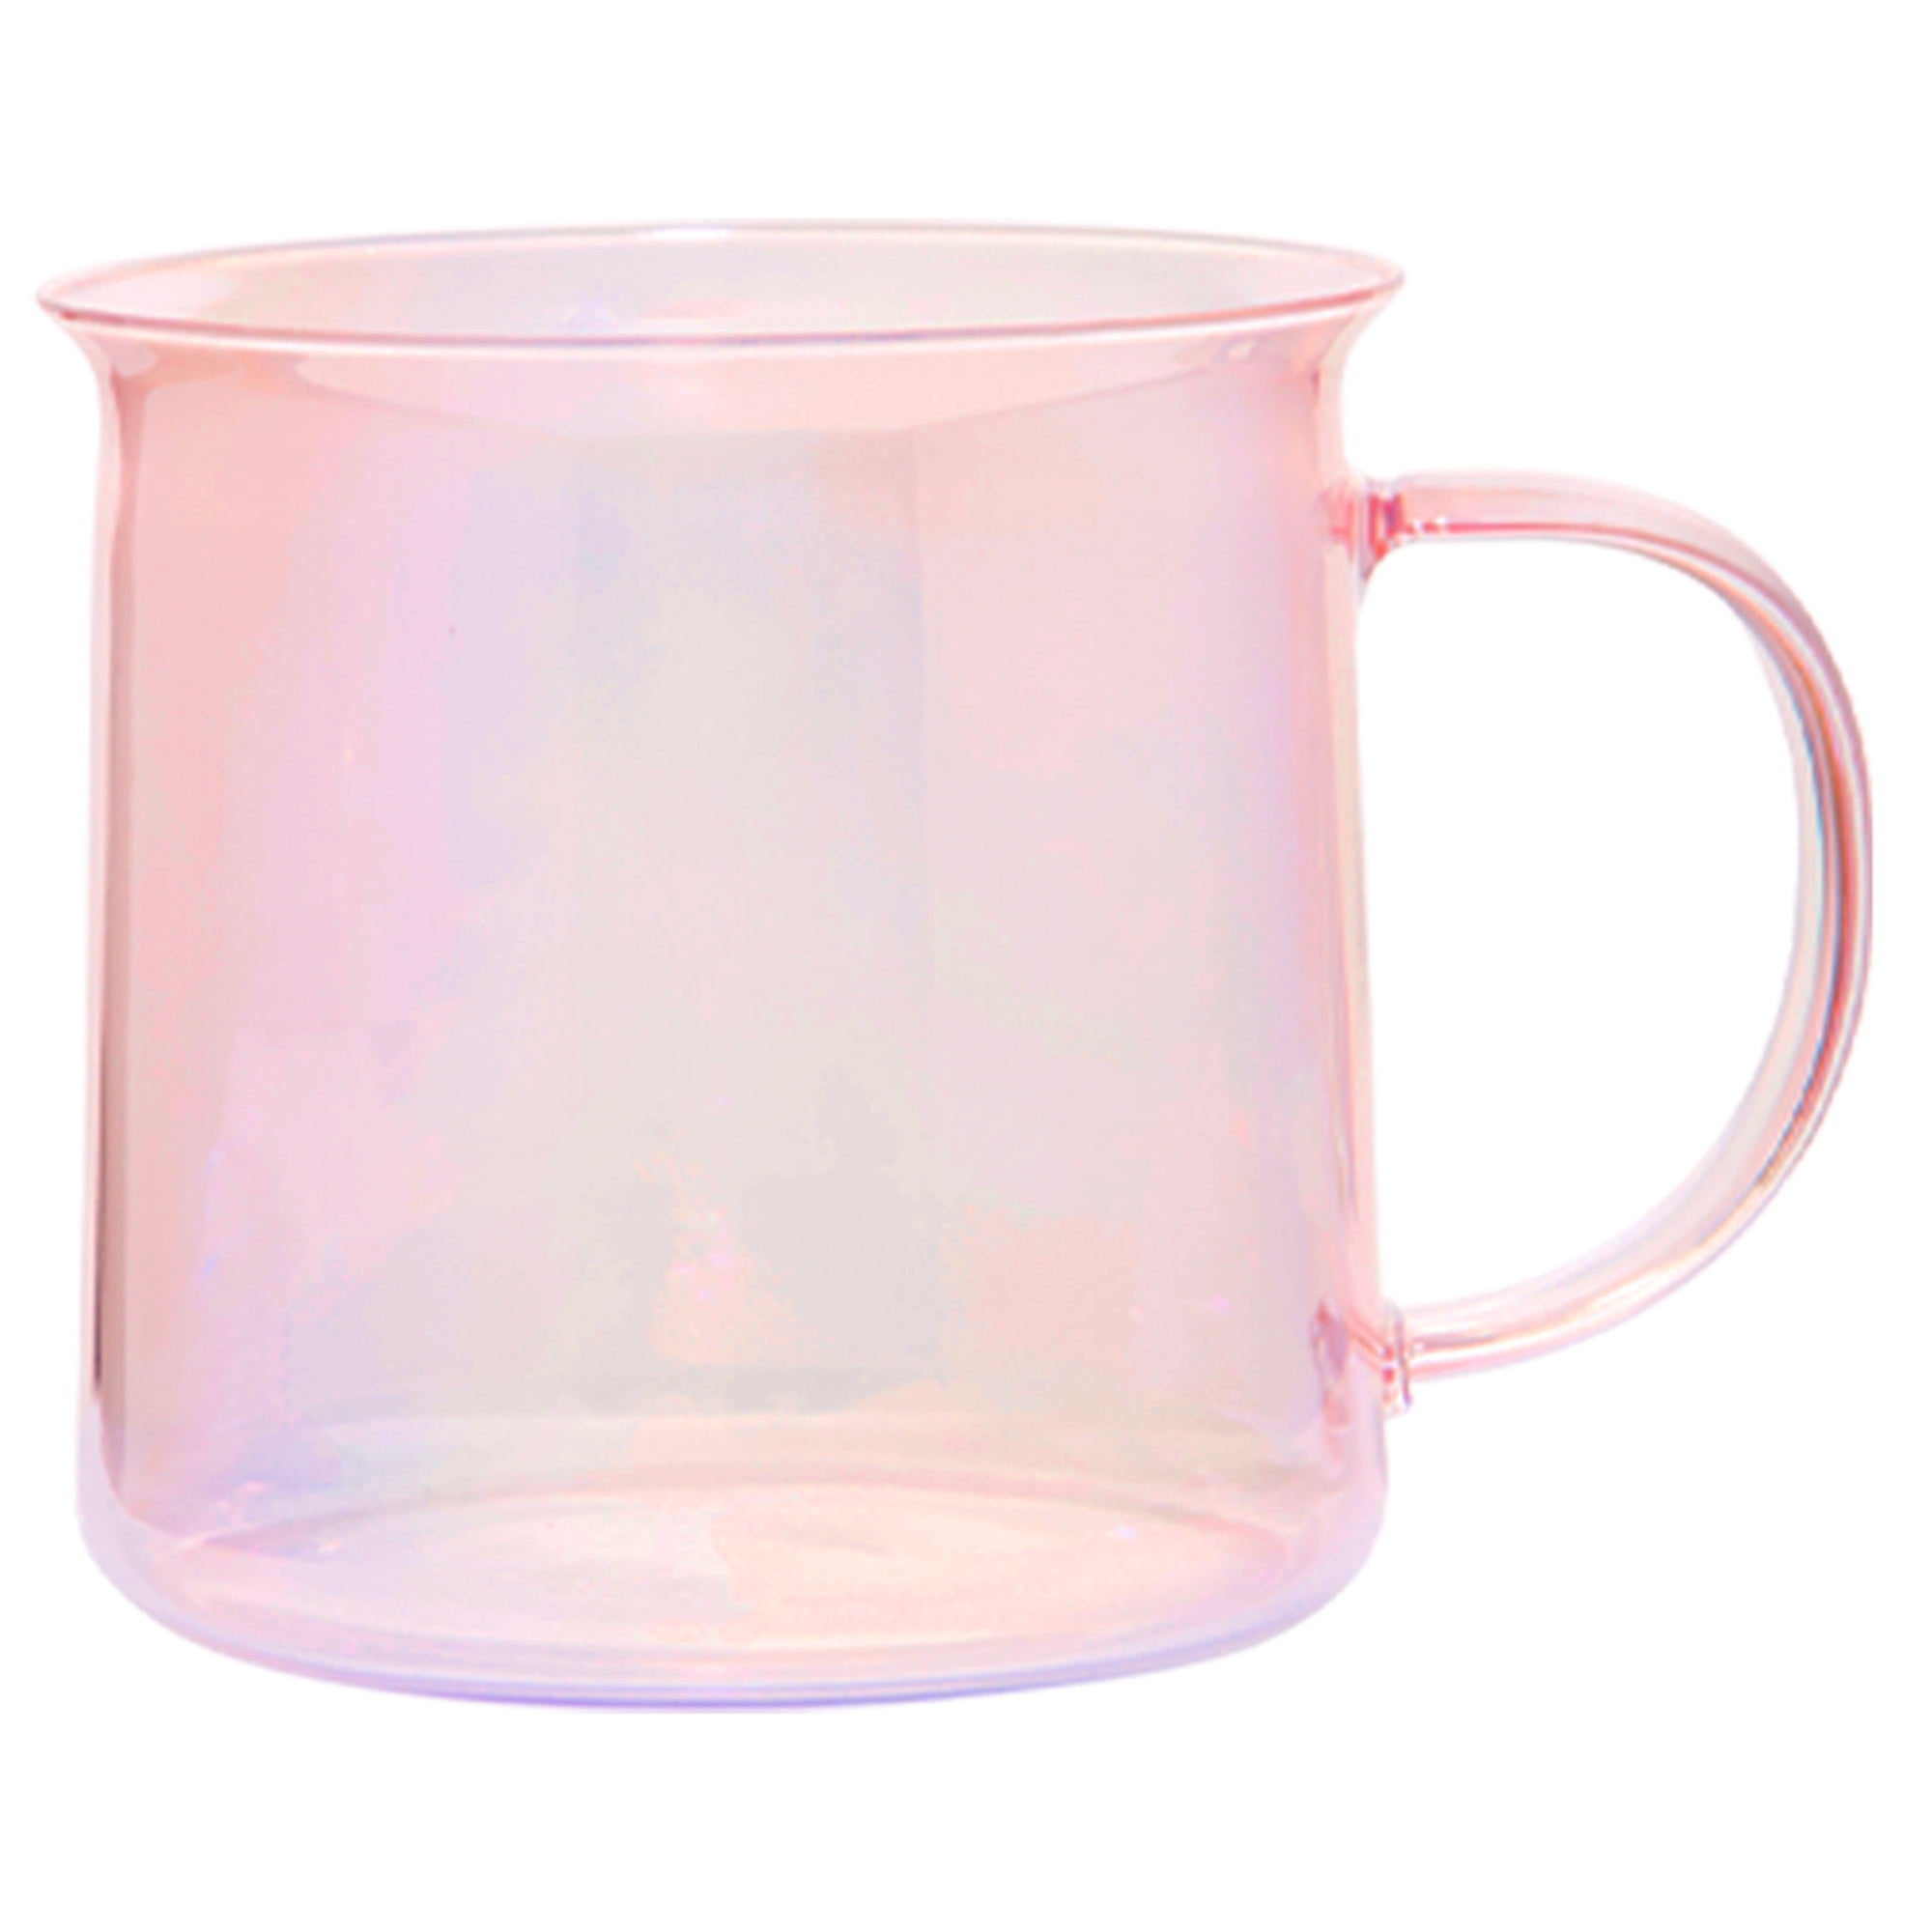 280ml Pink Lodz Crystal Cup - Maria Pia Casa